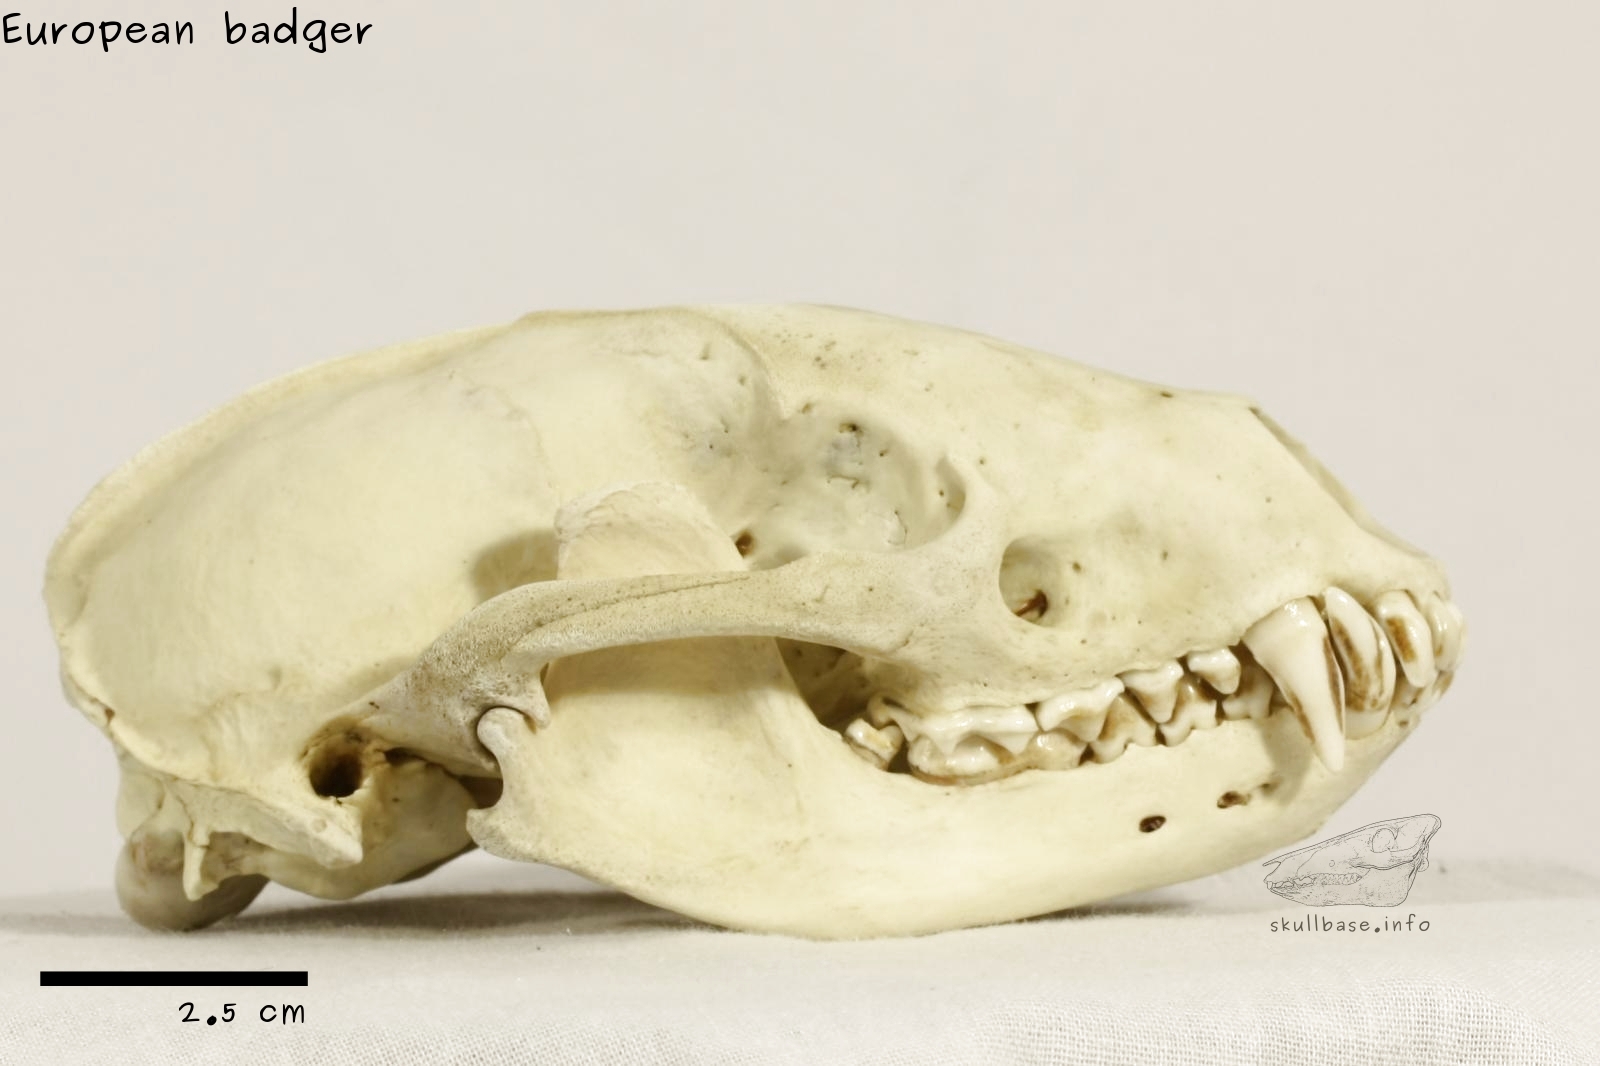 European badger (Meles meles) lateral view